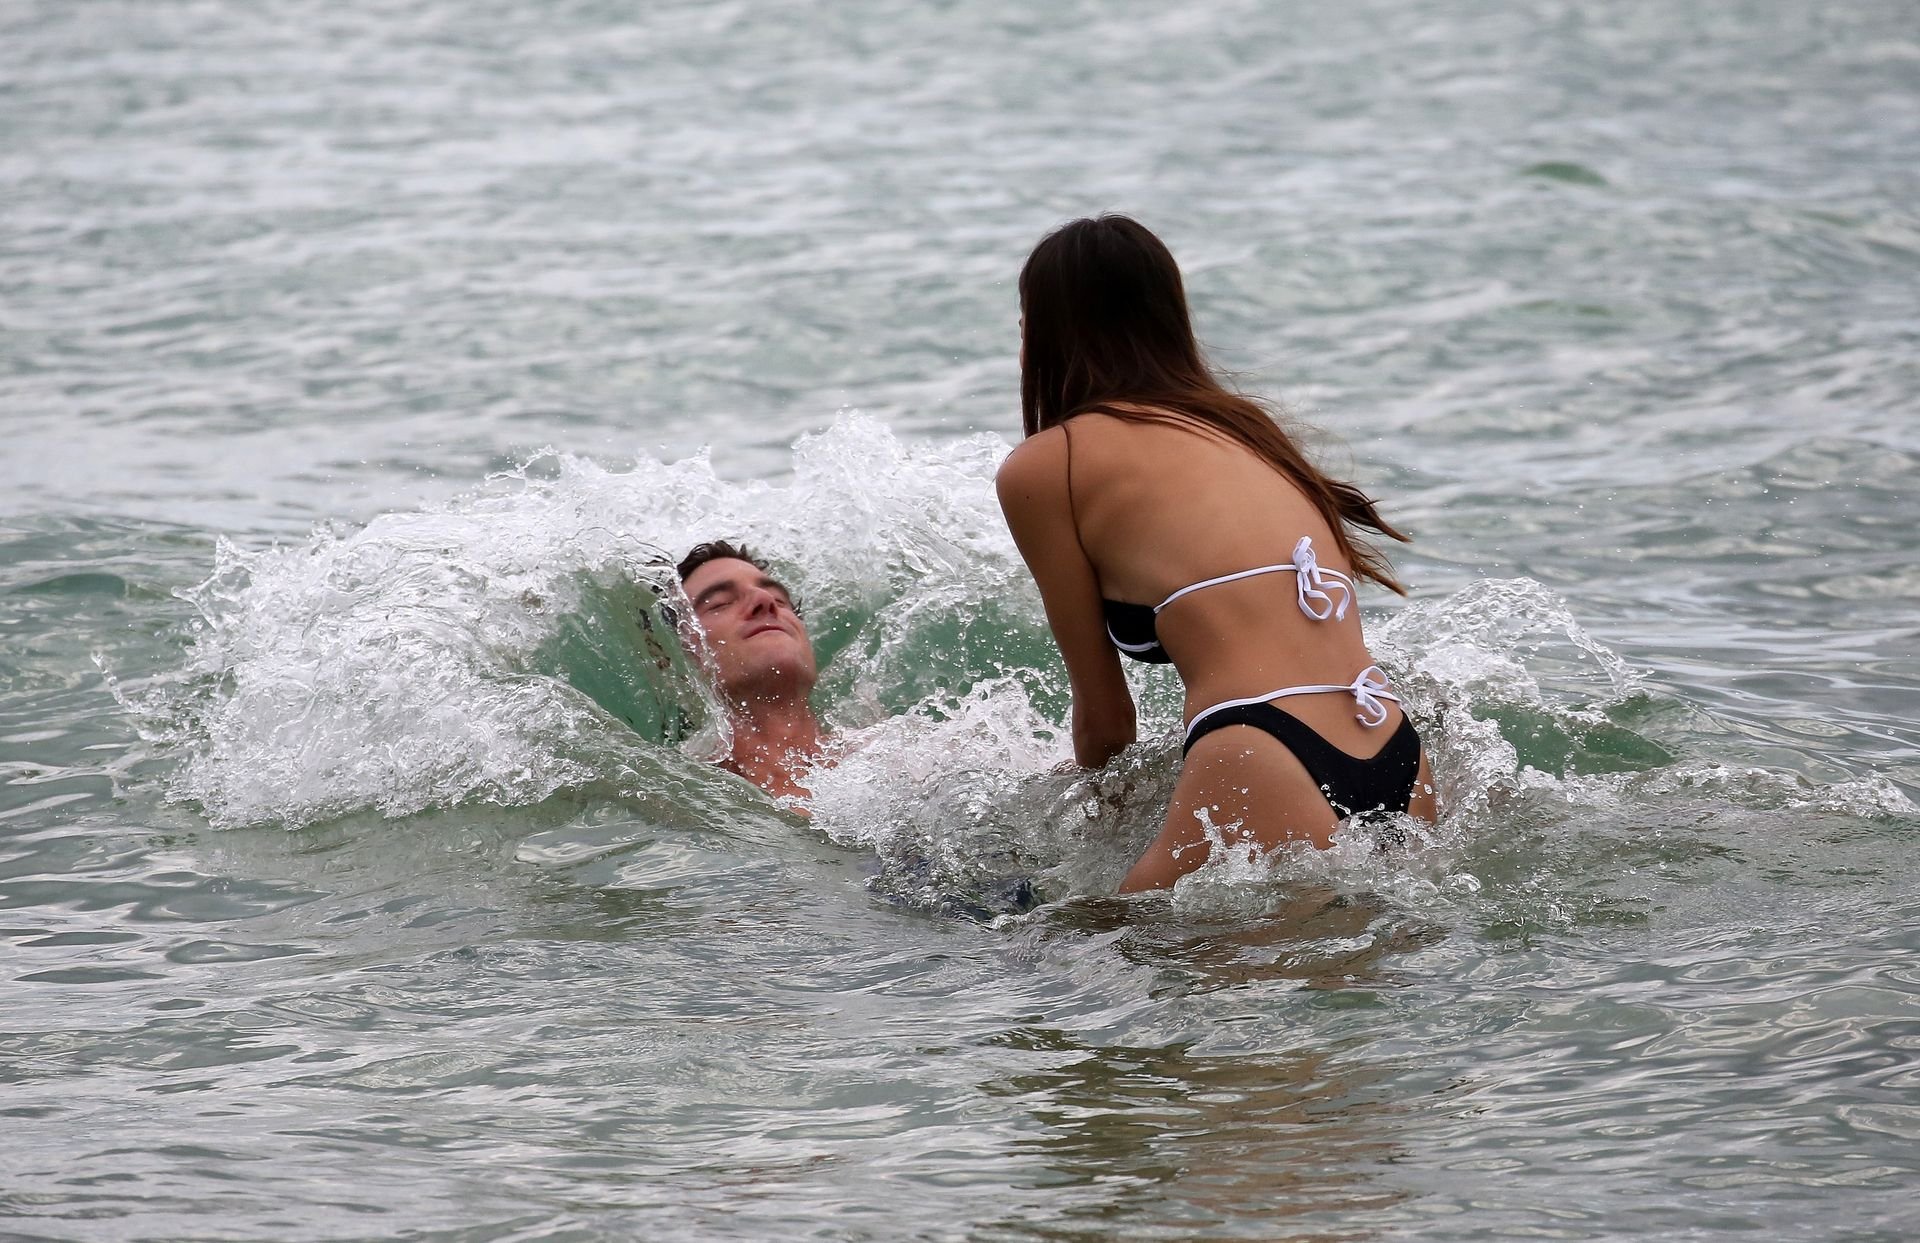 Sports Illustrated model Kelsey Merritt and her Olympian boyfriend Conor Dw...